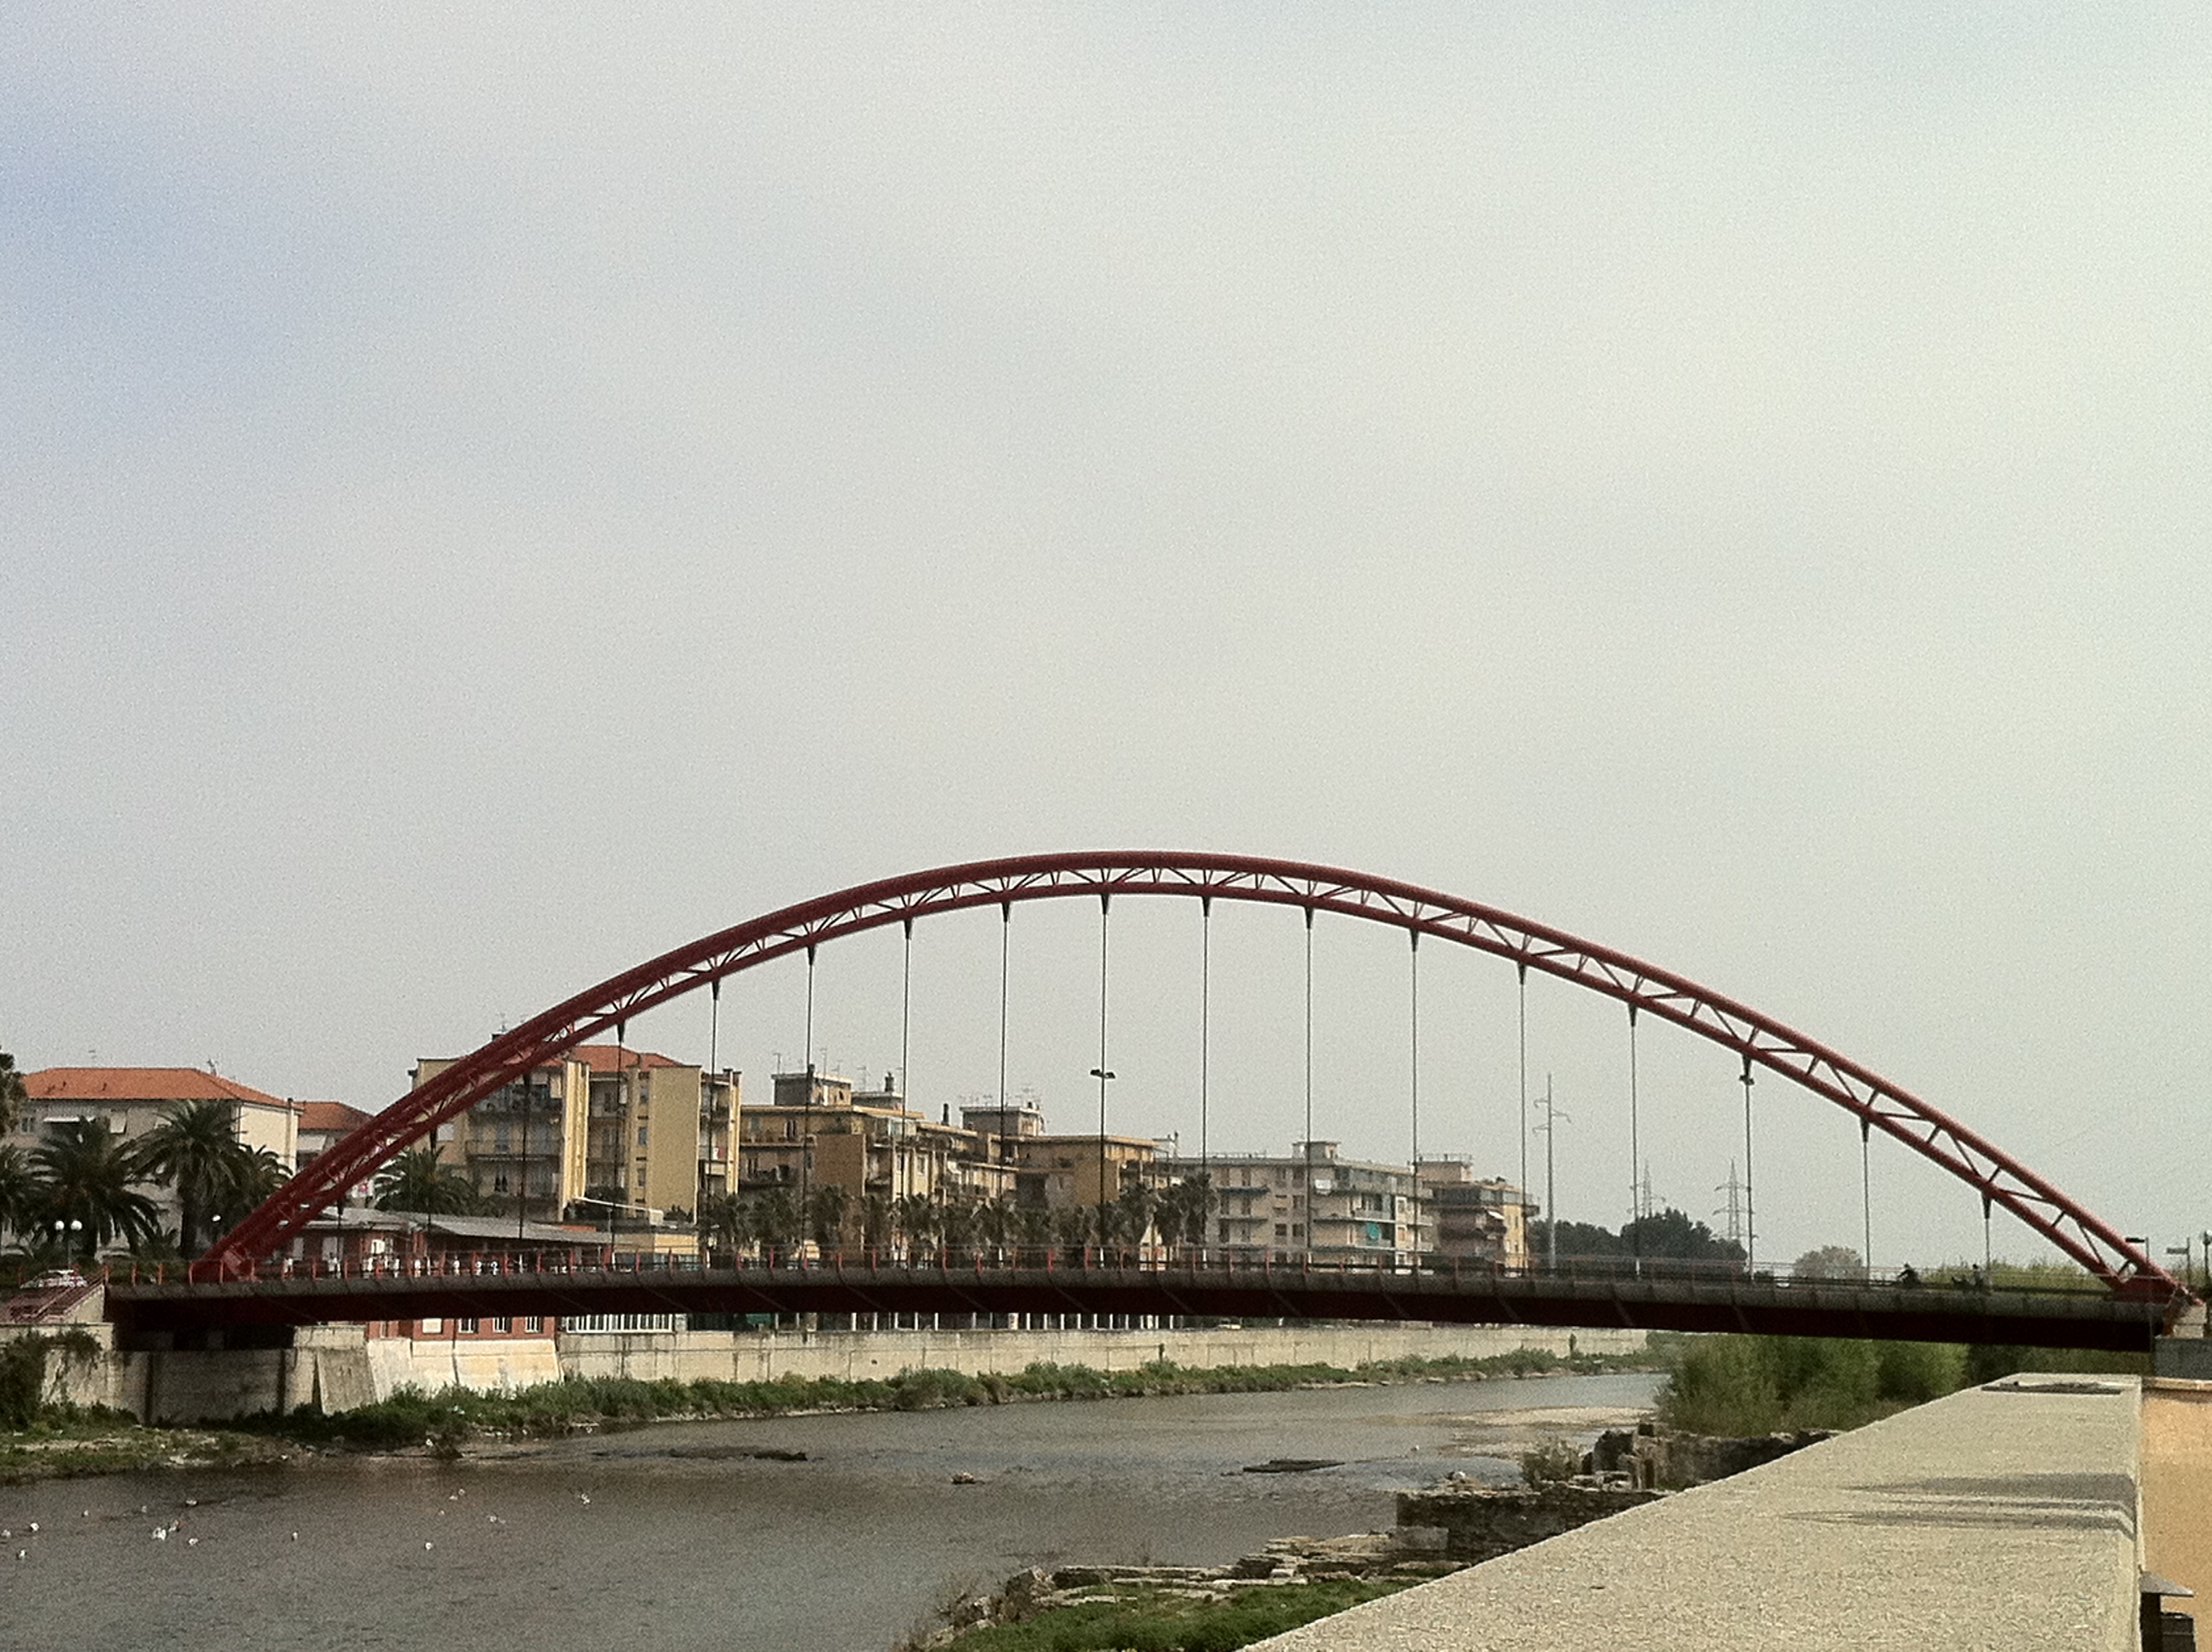 File:Red Bridge in Albenga.jpg - Wikimedia Commons